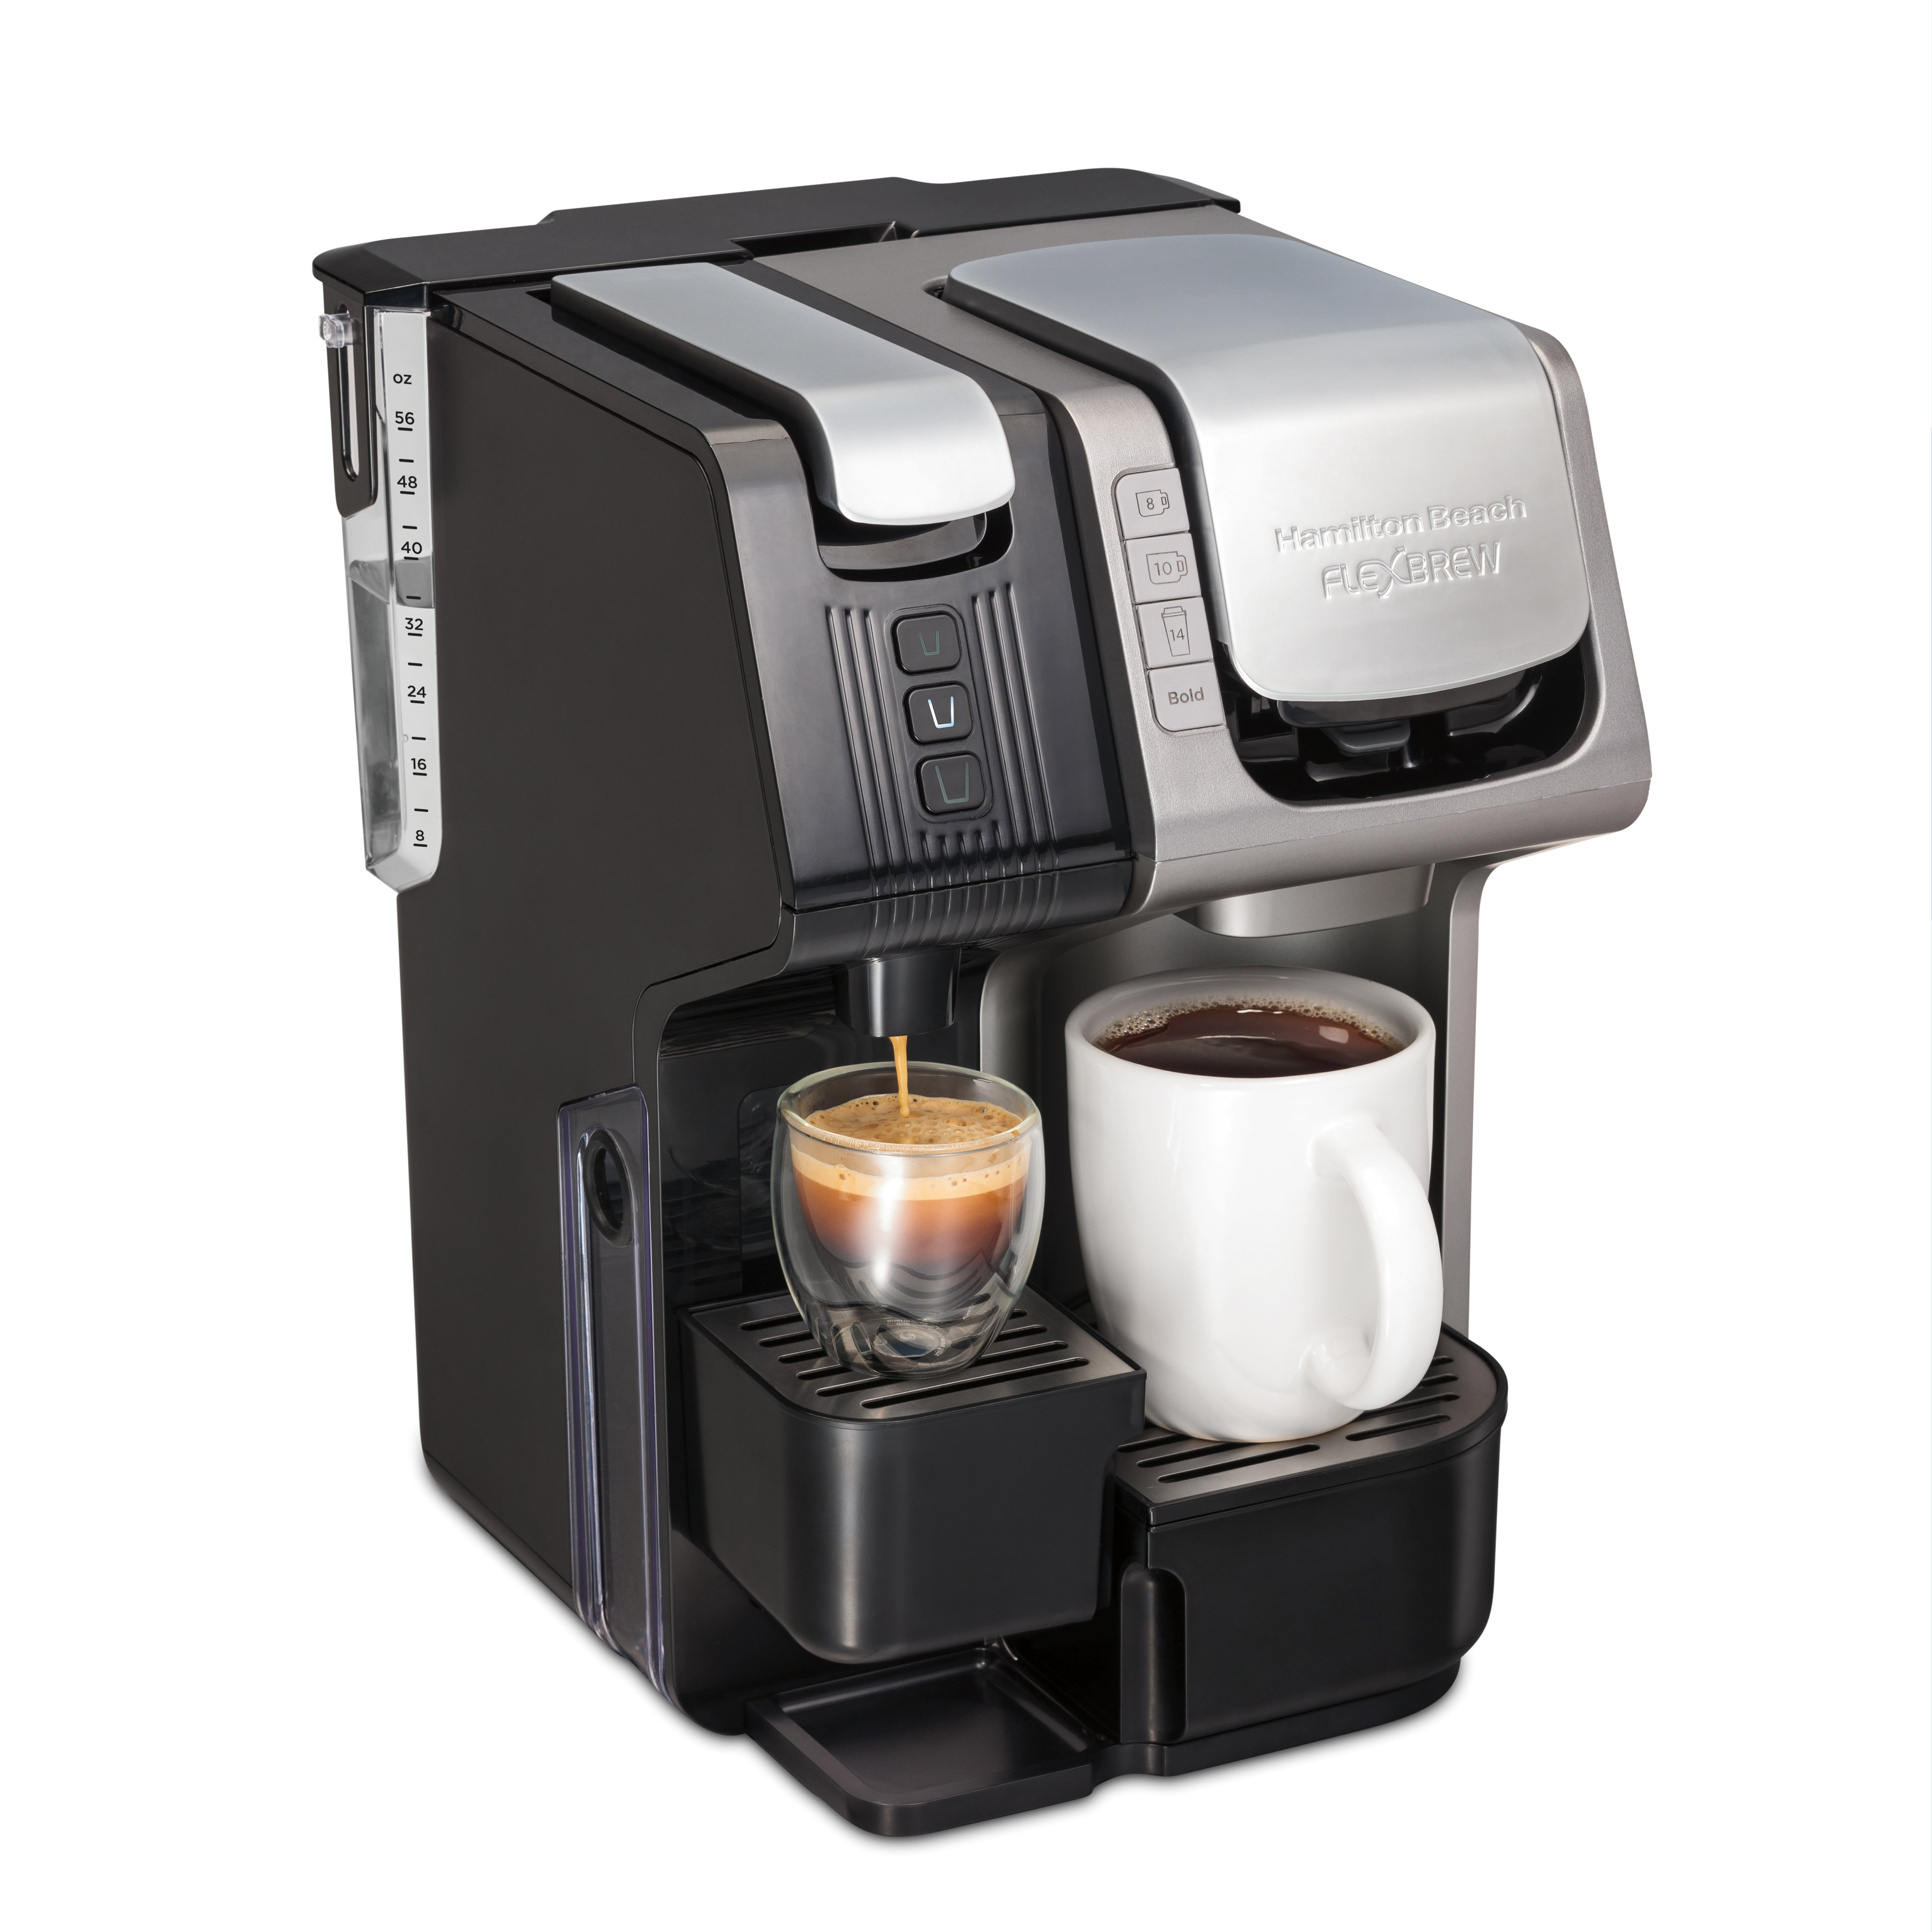 Combo 19 Bar Espresso & 10 Cup Drip Coffee Maker Black